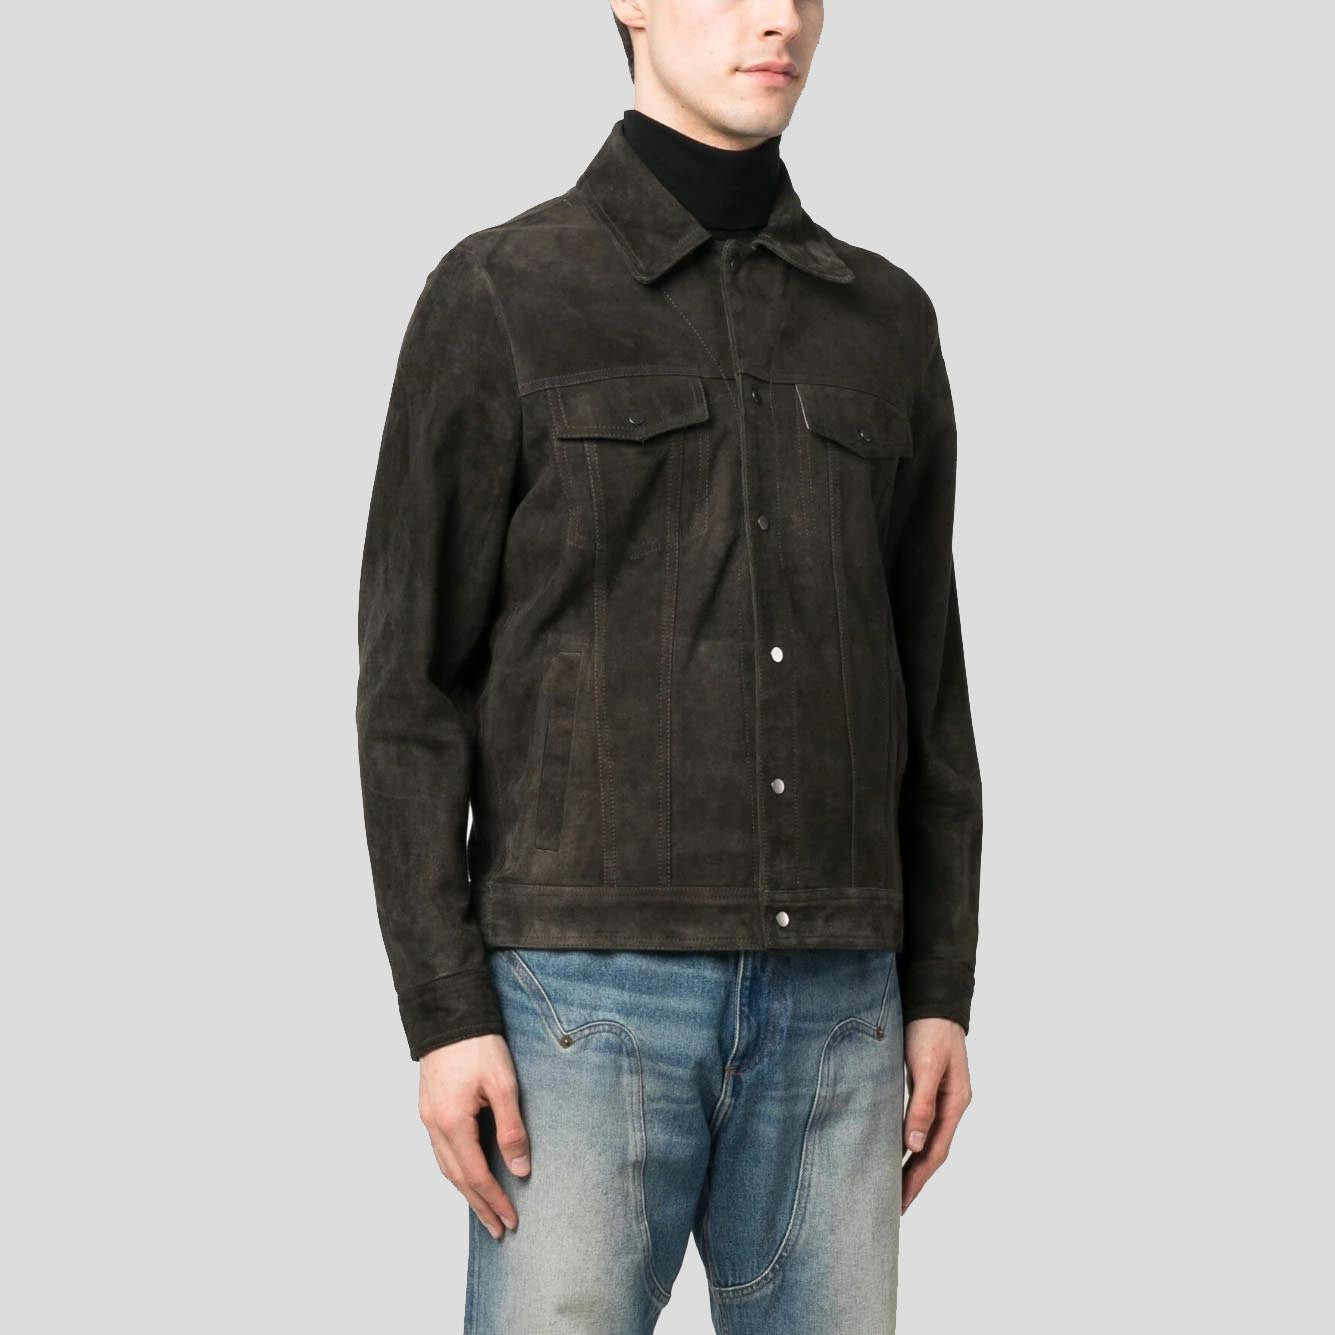 Men's Khaki Sheepskin Suede Leather Shirt Jacket